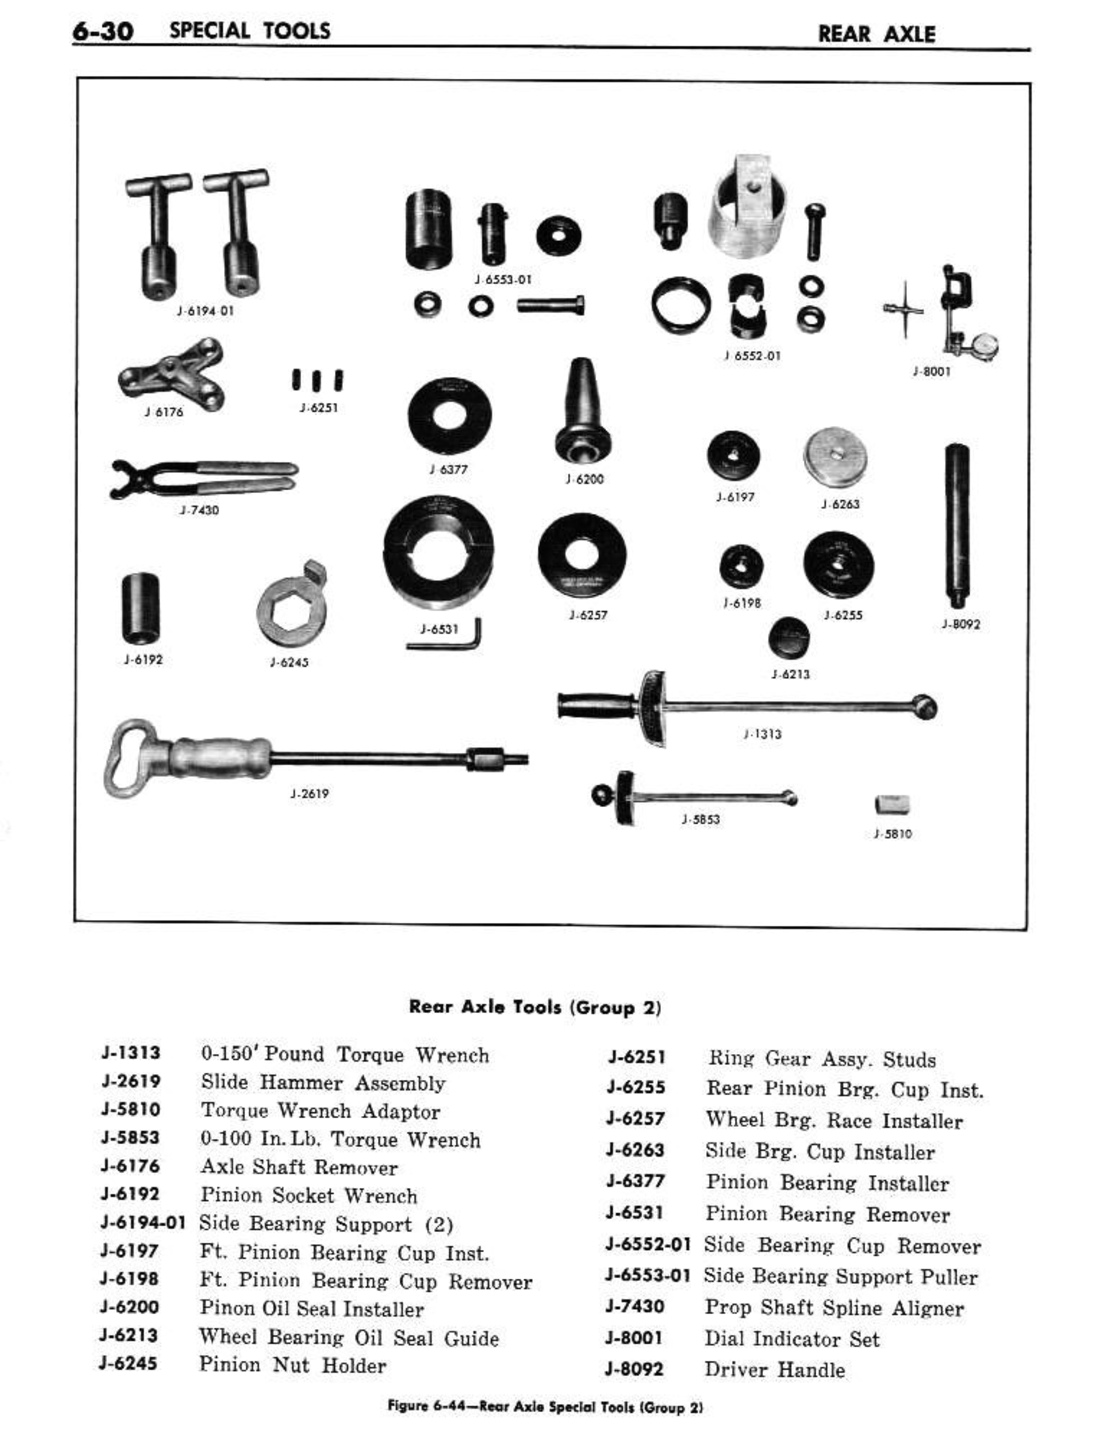 n_07 1960 Buick Shop Manual - Rear Axle-030-030.jpg